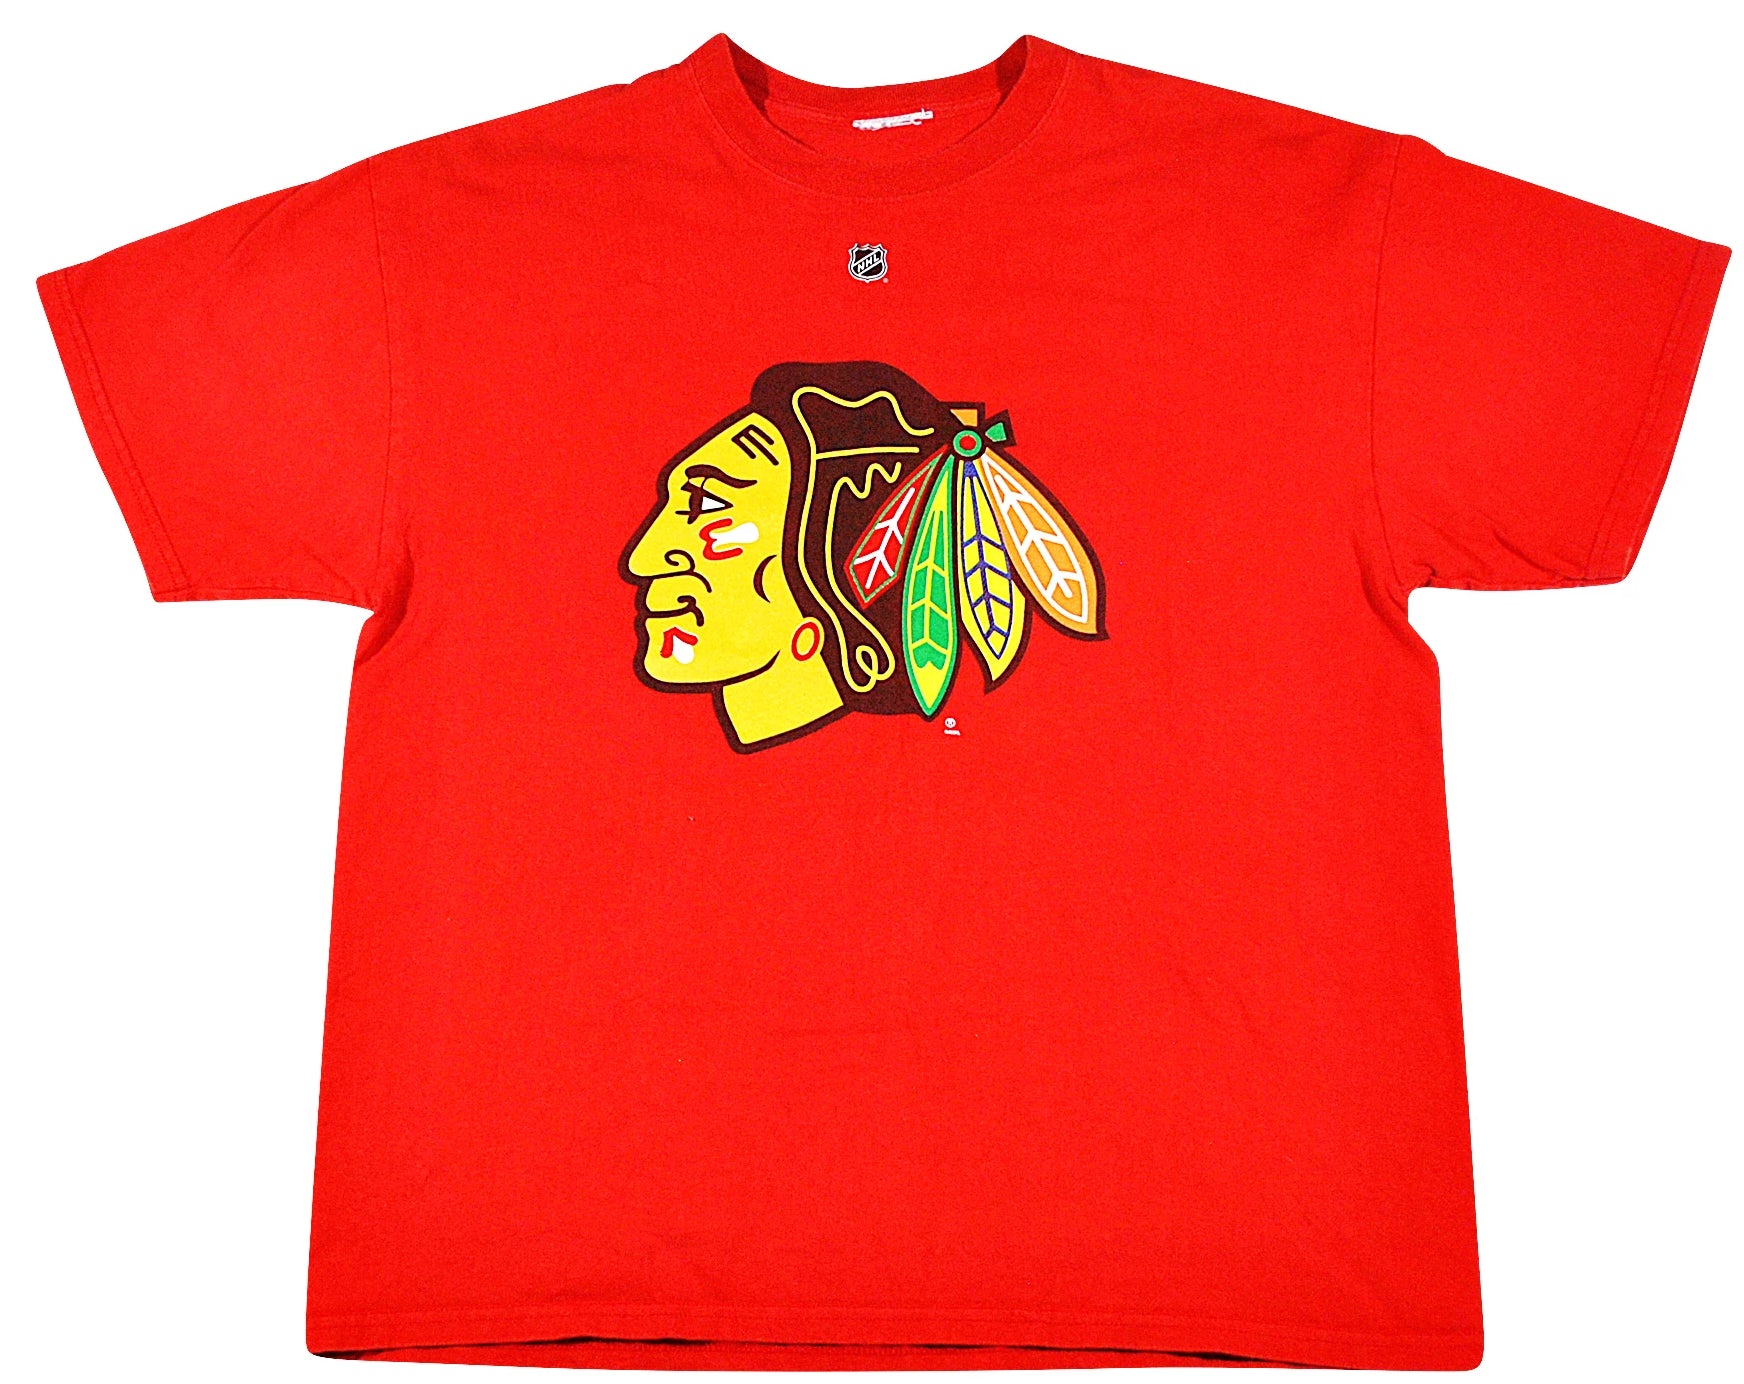 Majestic Chicago Blackhawks T-Shirt XL Red Mens Short Sleeve NHL Vintage